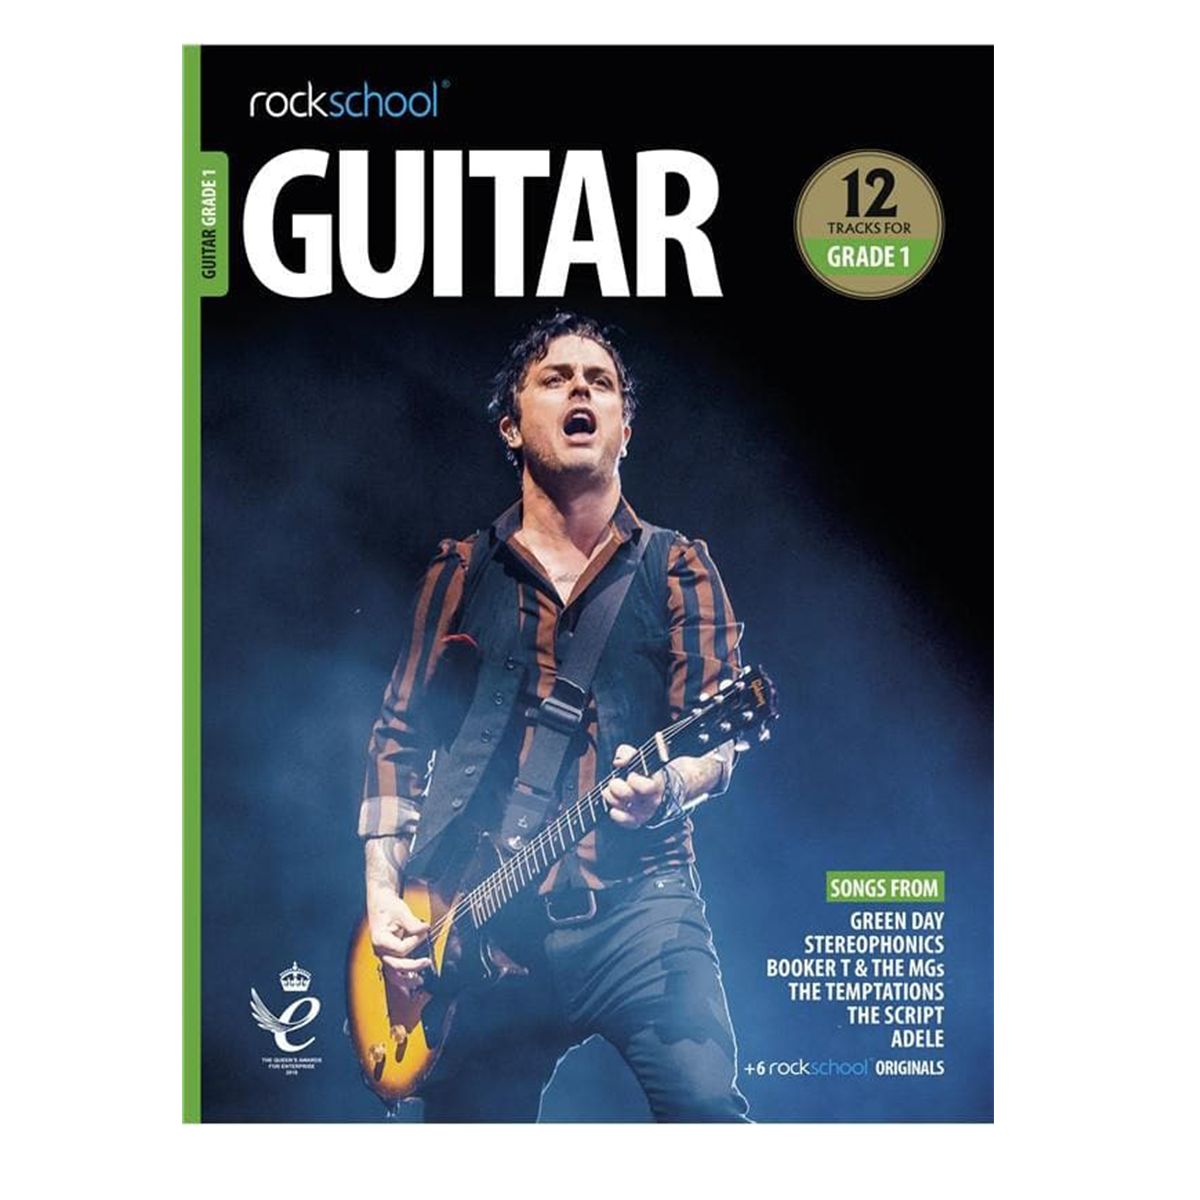 Rockschool Guitar Grade 1 Exam Book (2018)